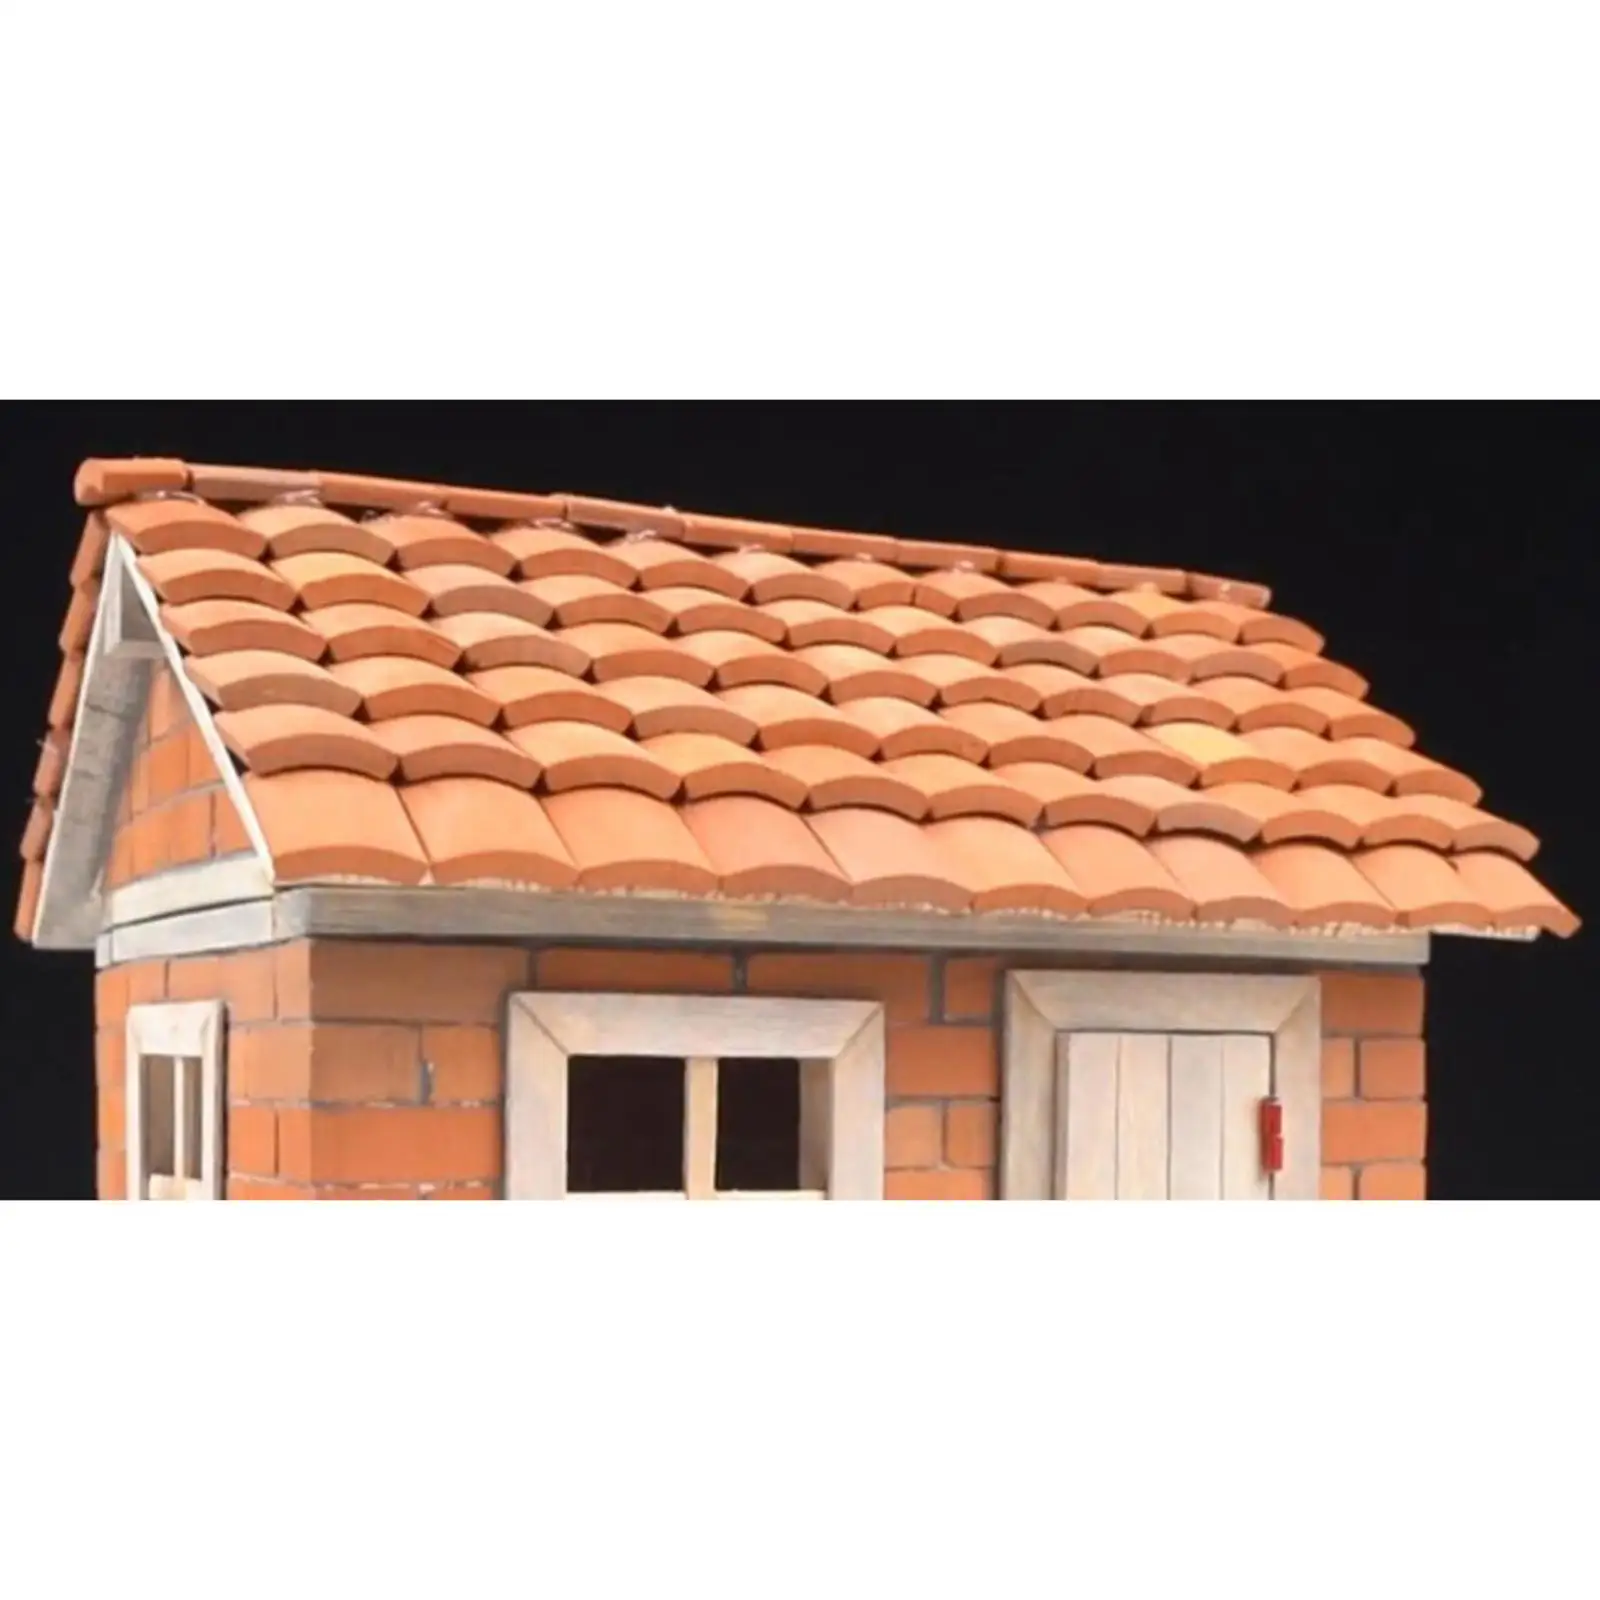 40 Pieces Miniature Diorama Bricks,House Roof Mold Building Scene,12x10mm,Sand